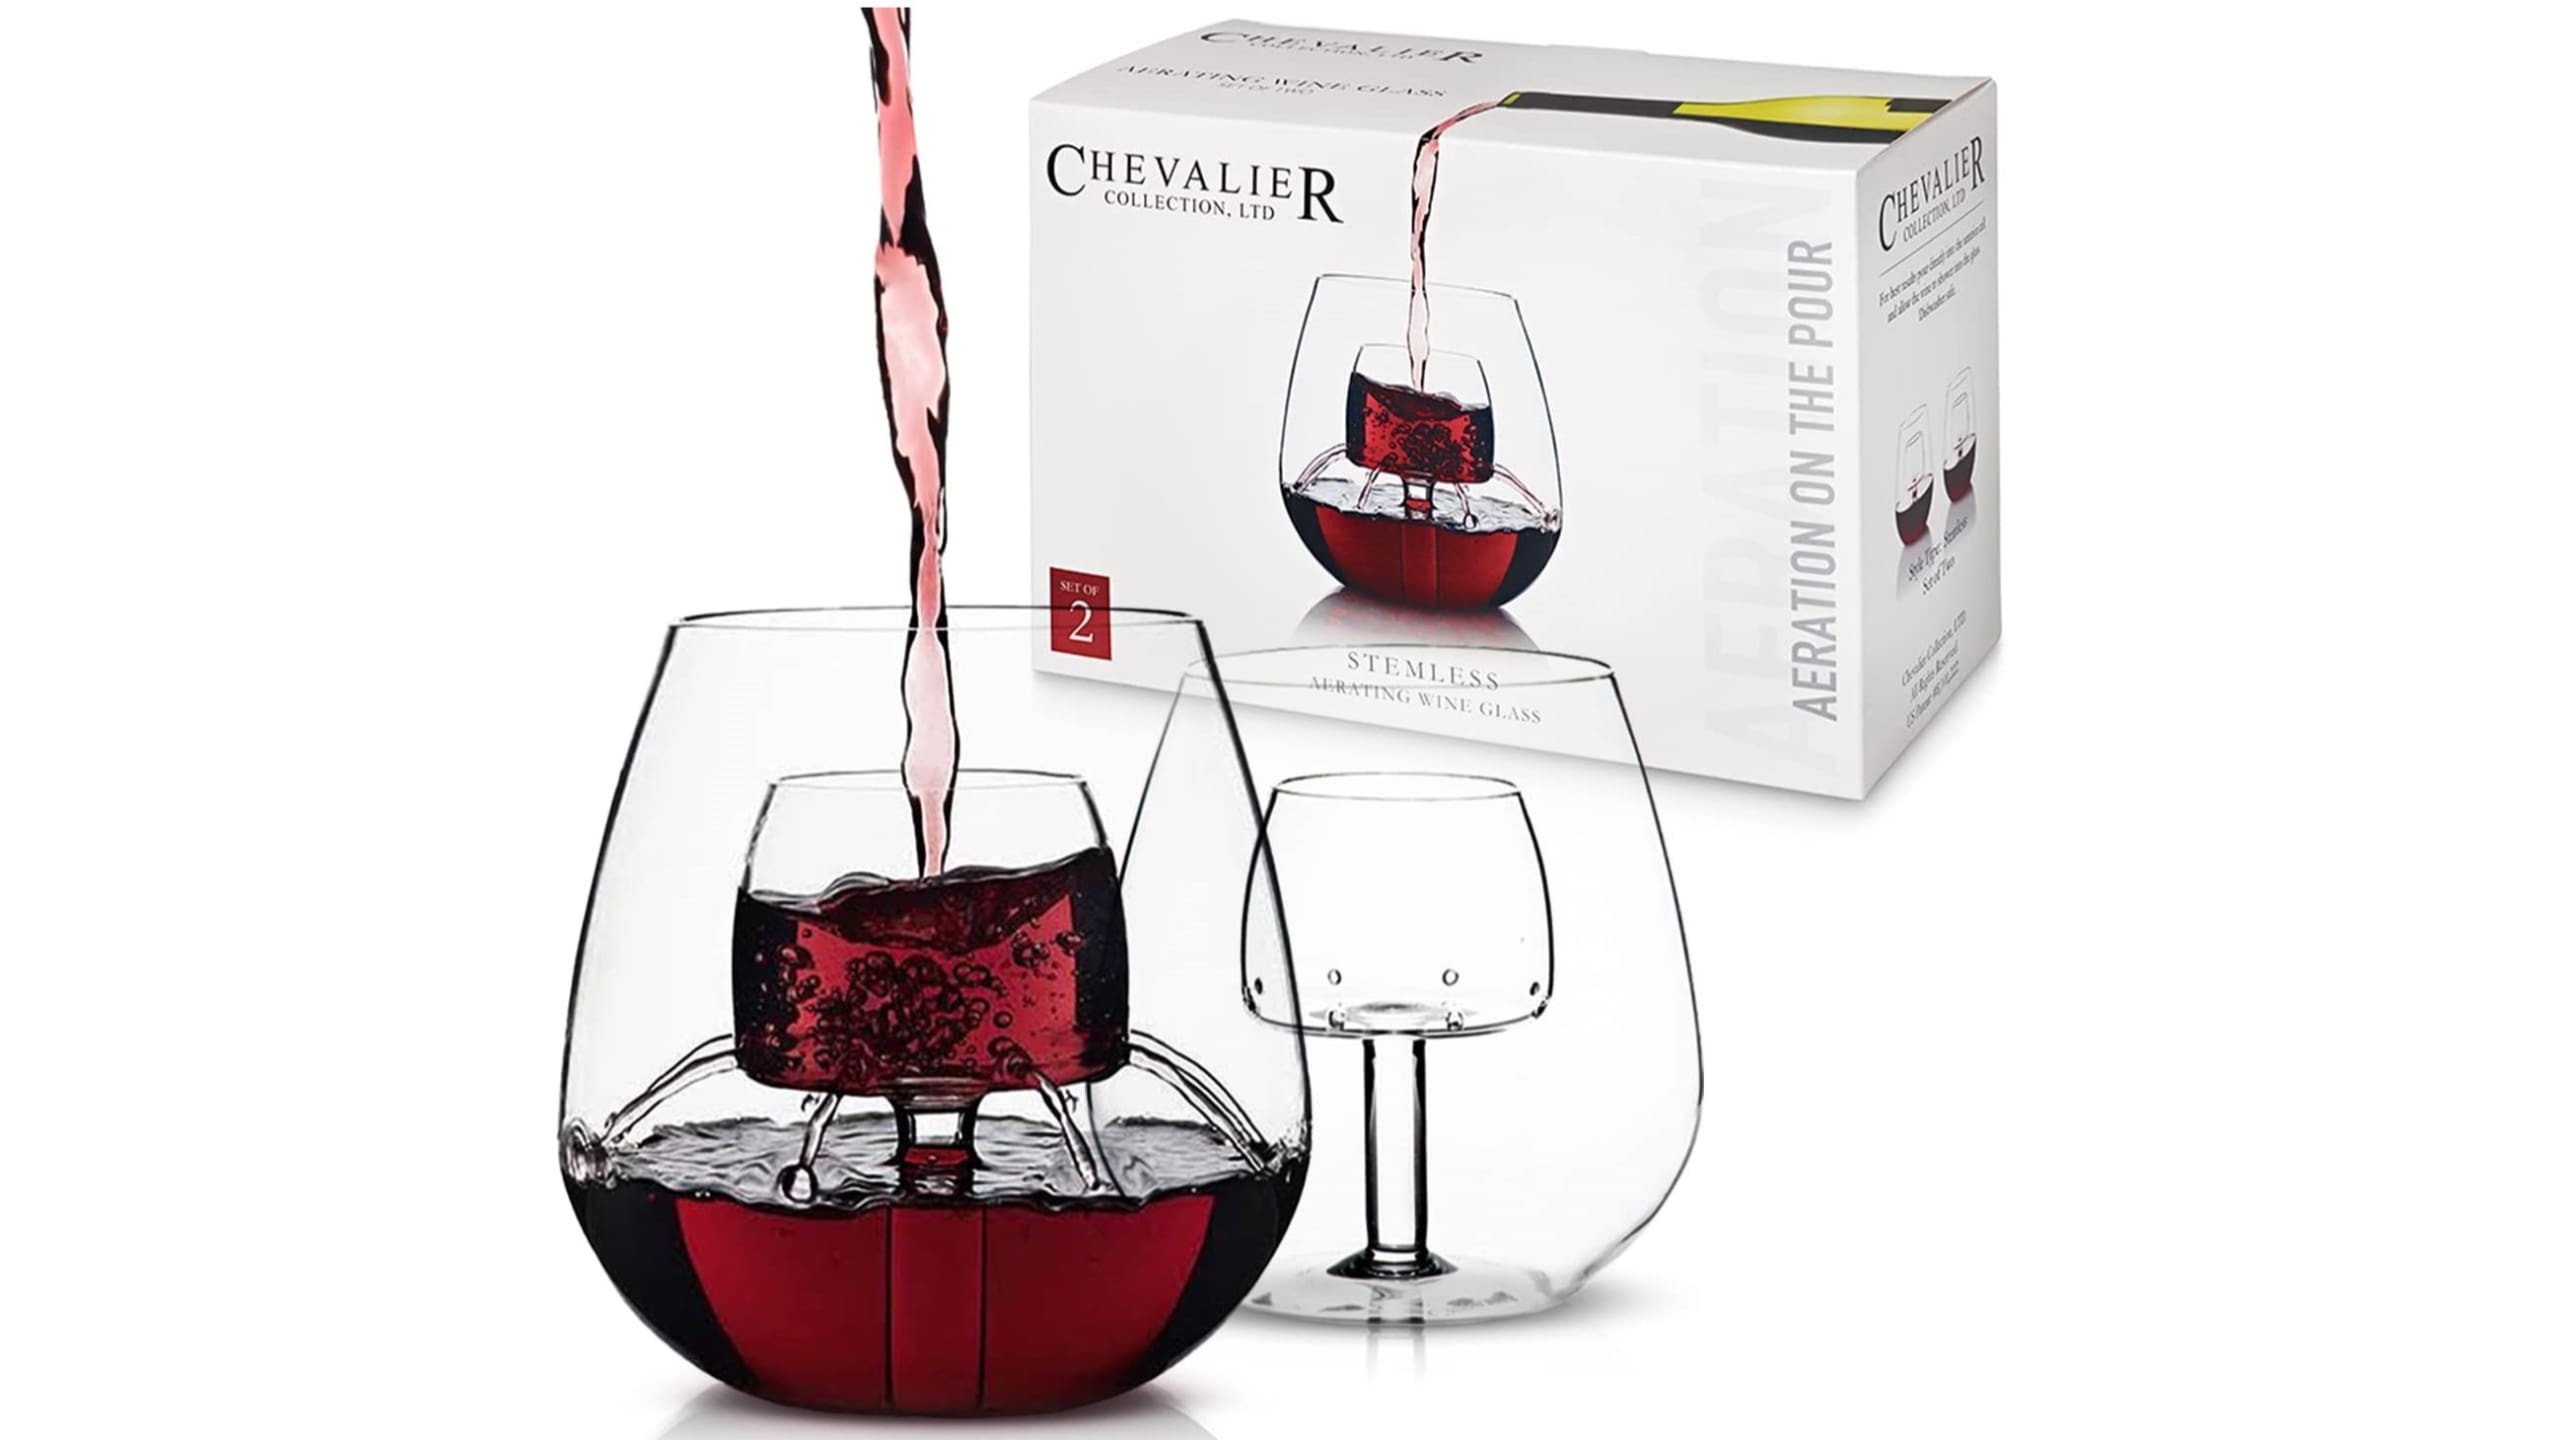 stemless aerating wine glass